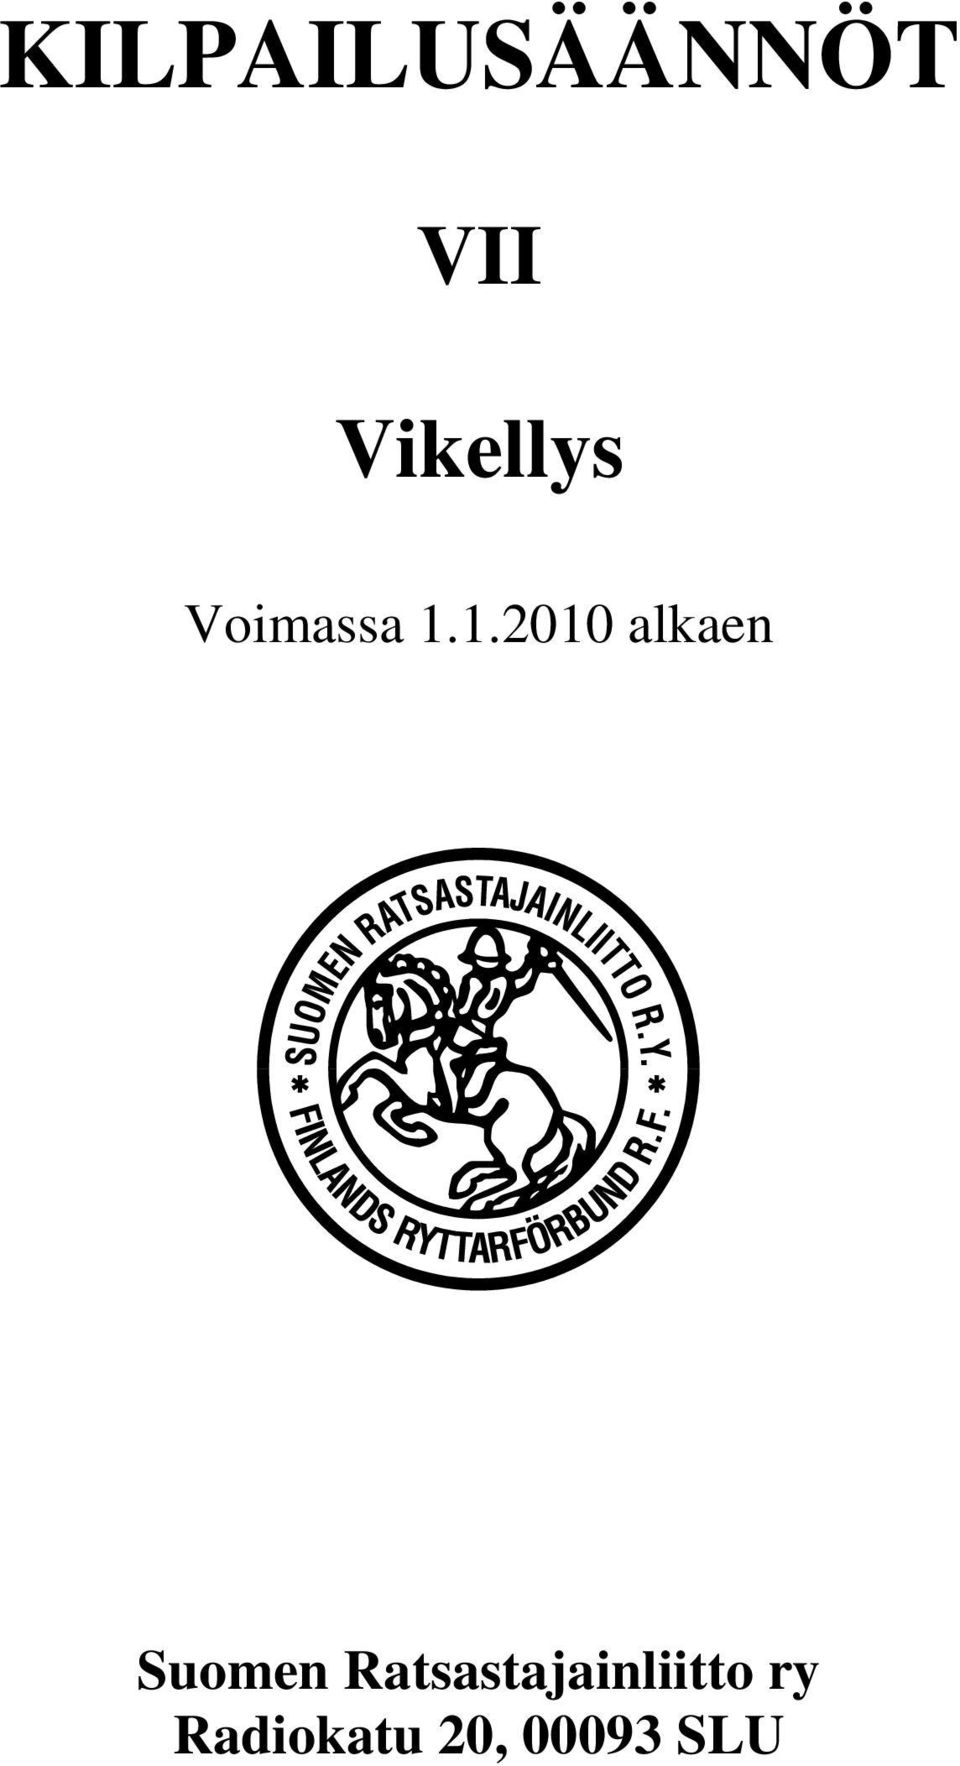 1.2010 alkaen Suomen